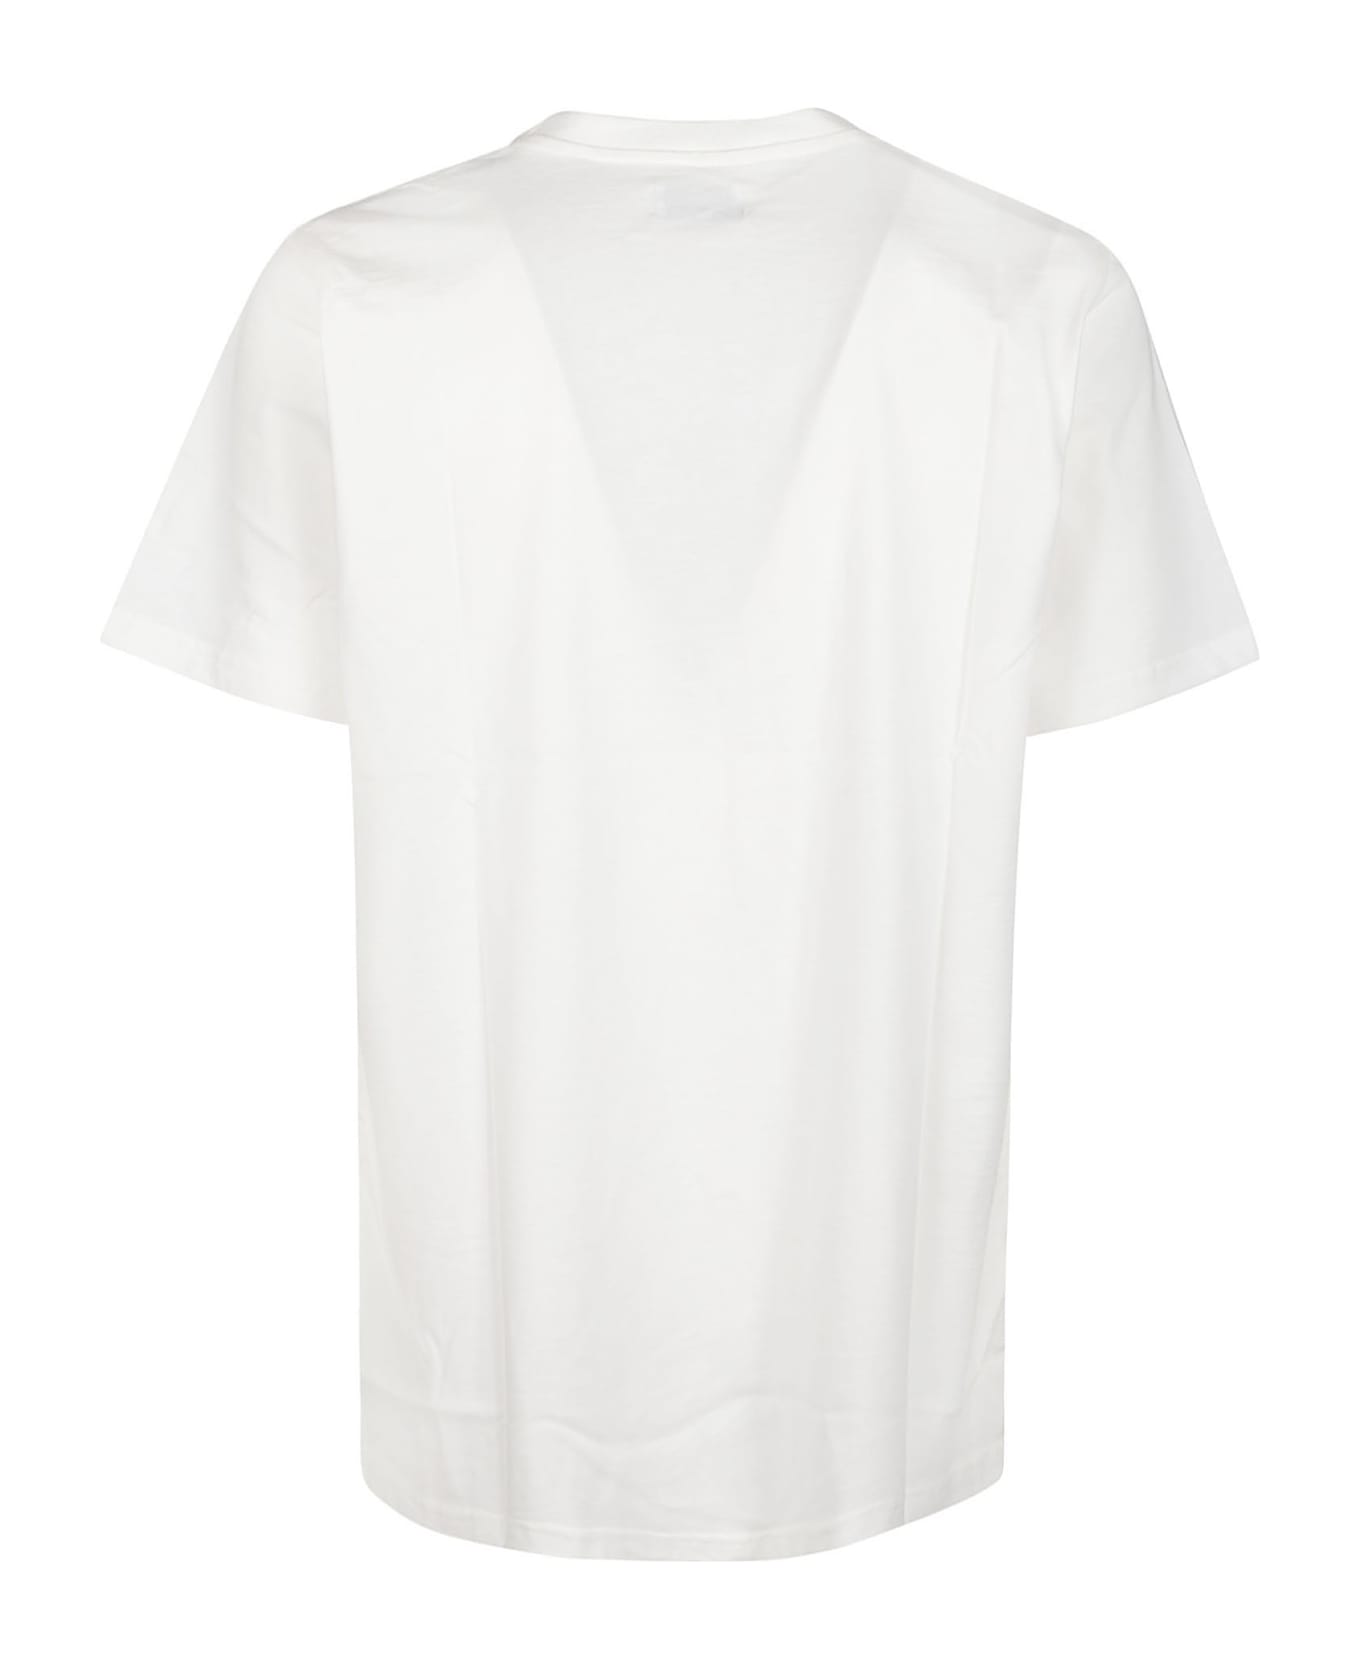 Family First Milano Symbol T-shirt - White シャツ